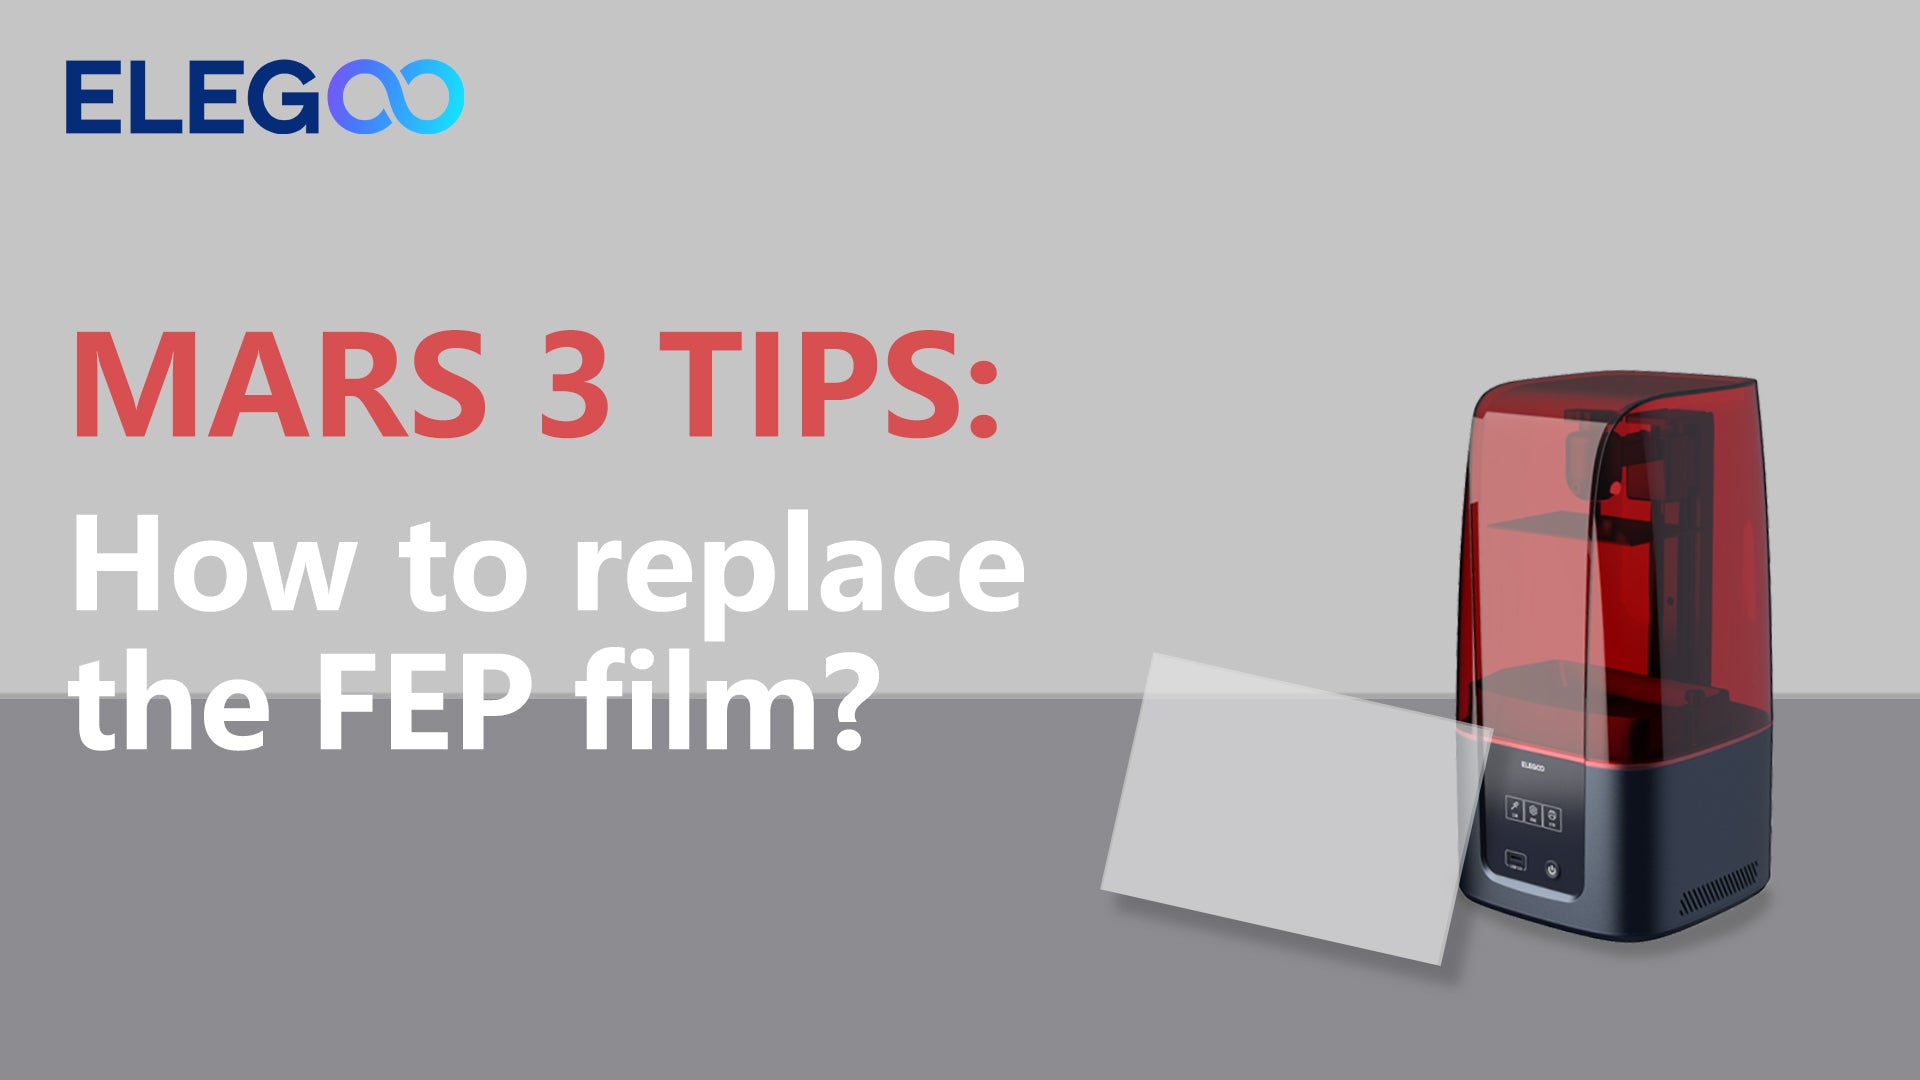 ELEGOO MARS 3: How to replace the FEP film?